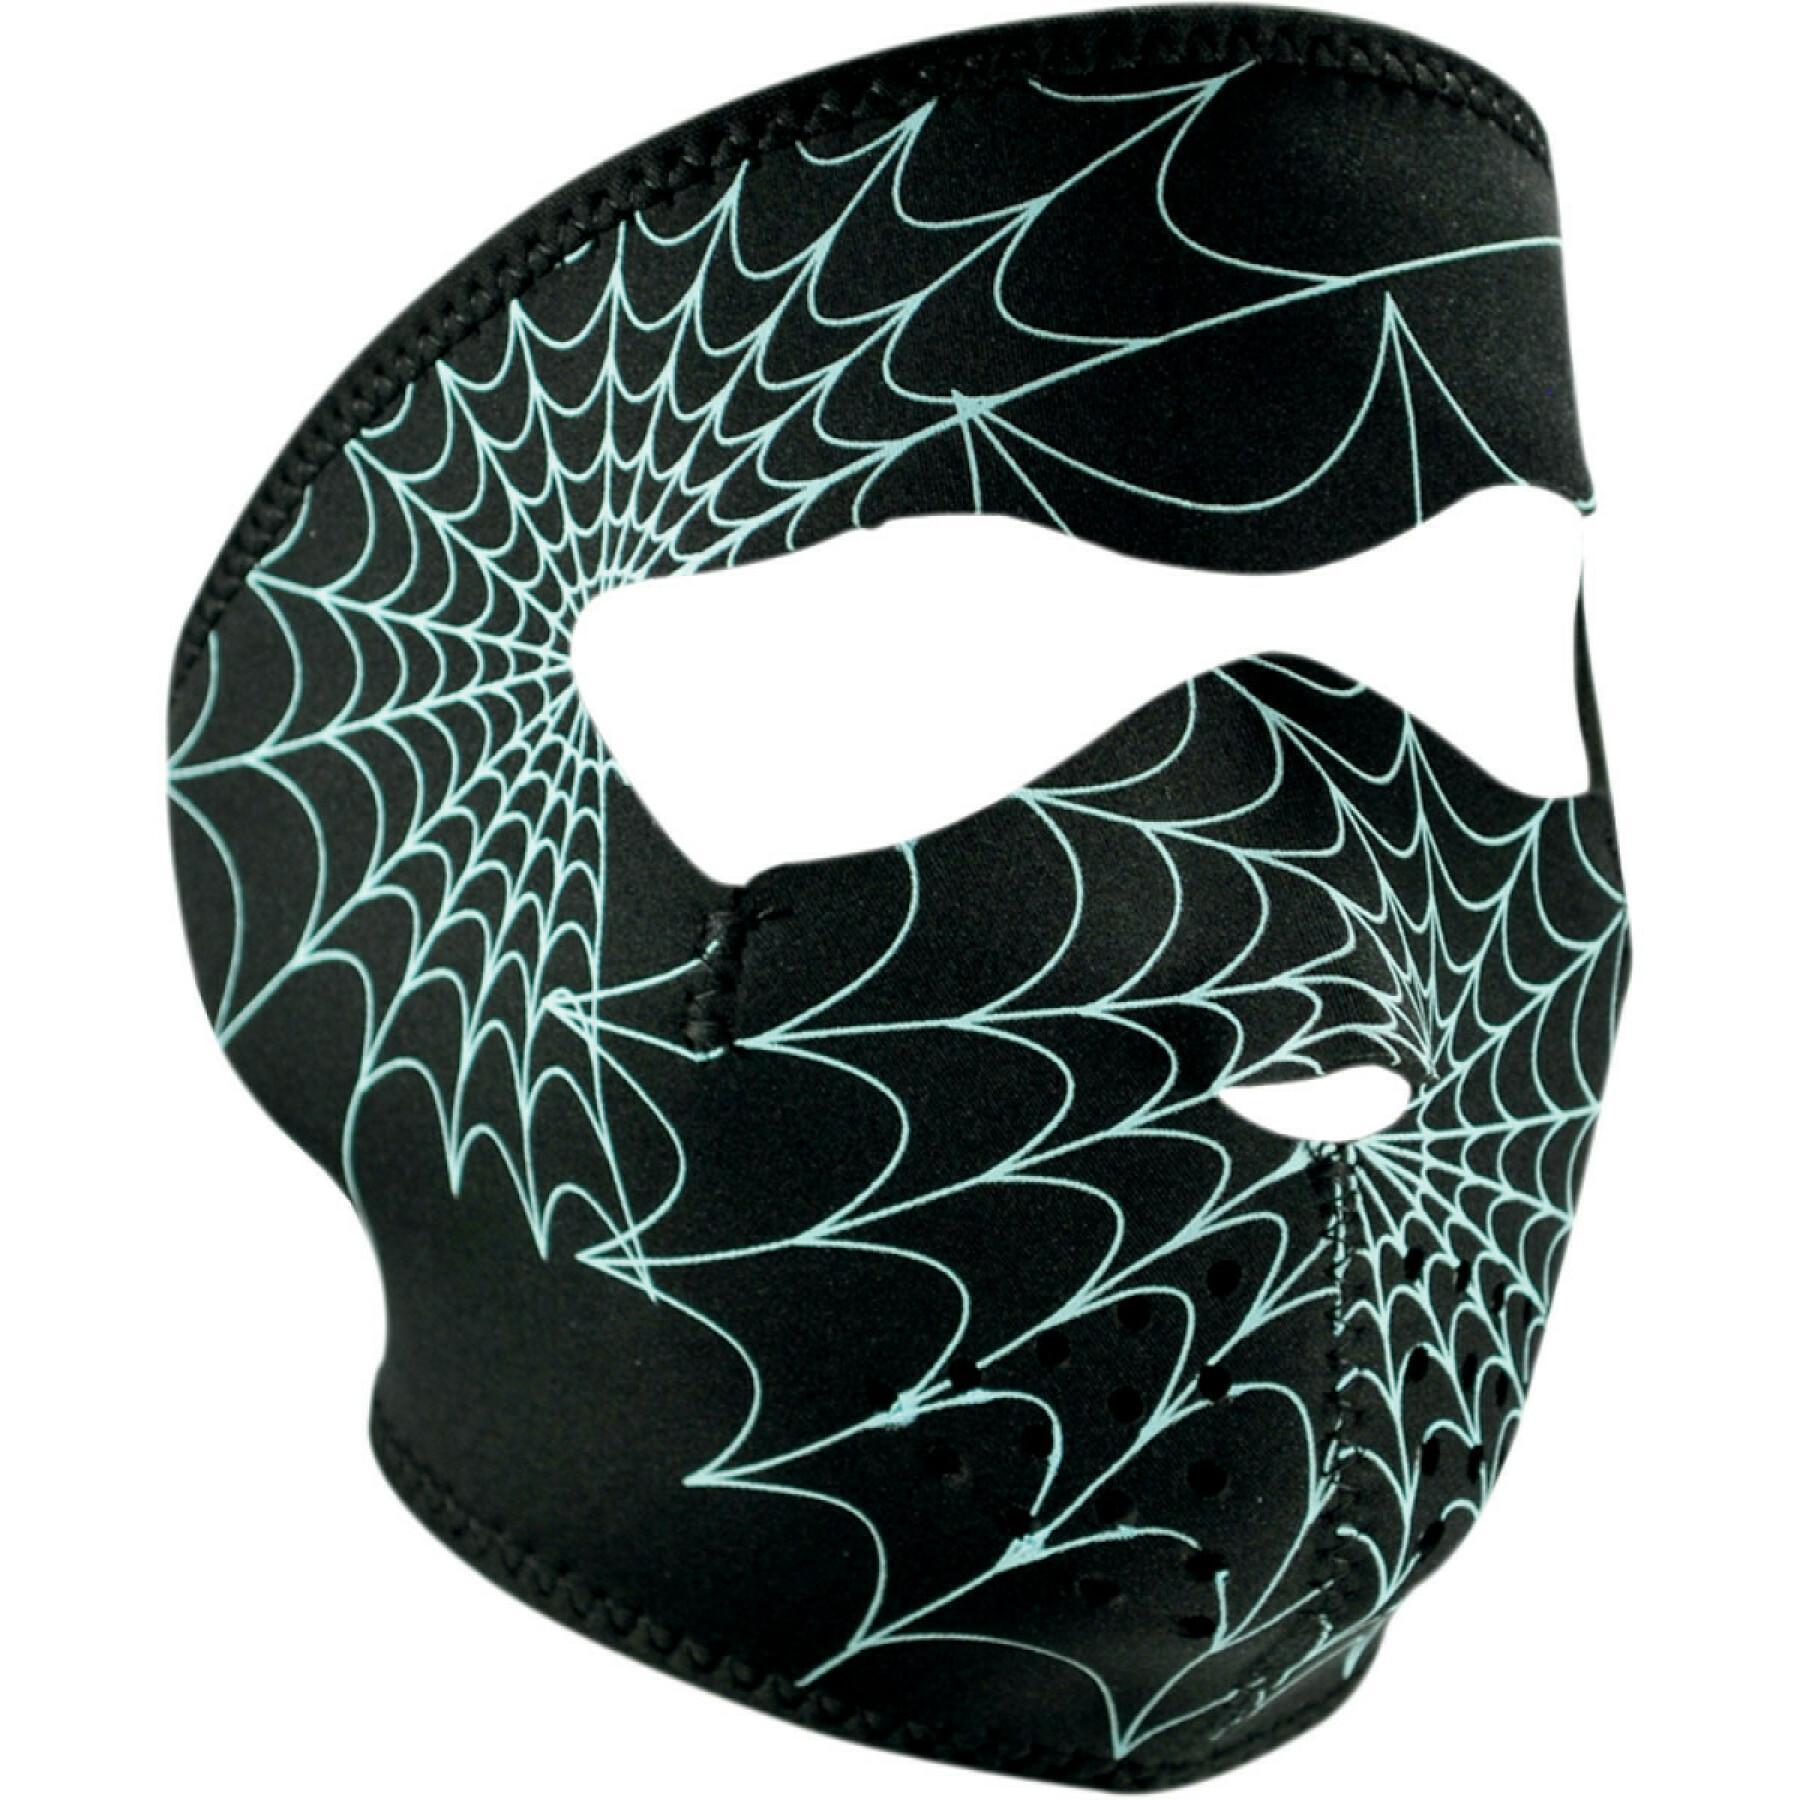 Motorfiets bivakmuts Zan Headgear full face glow-in-the-dark spider web